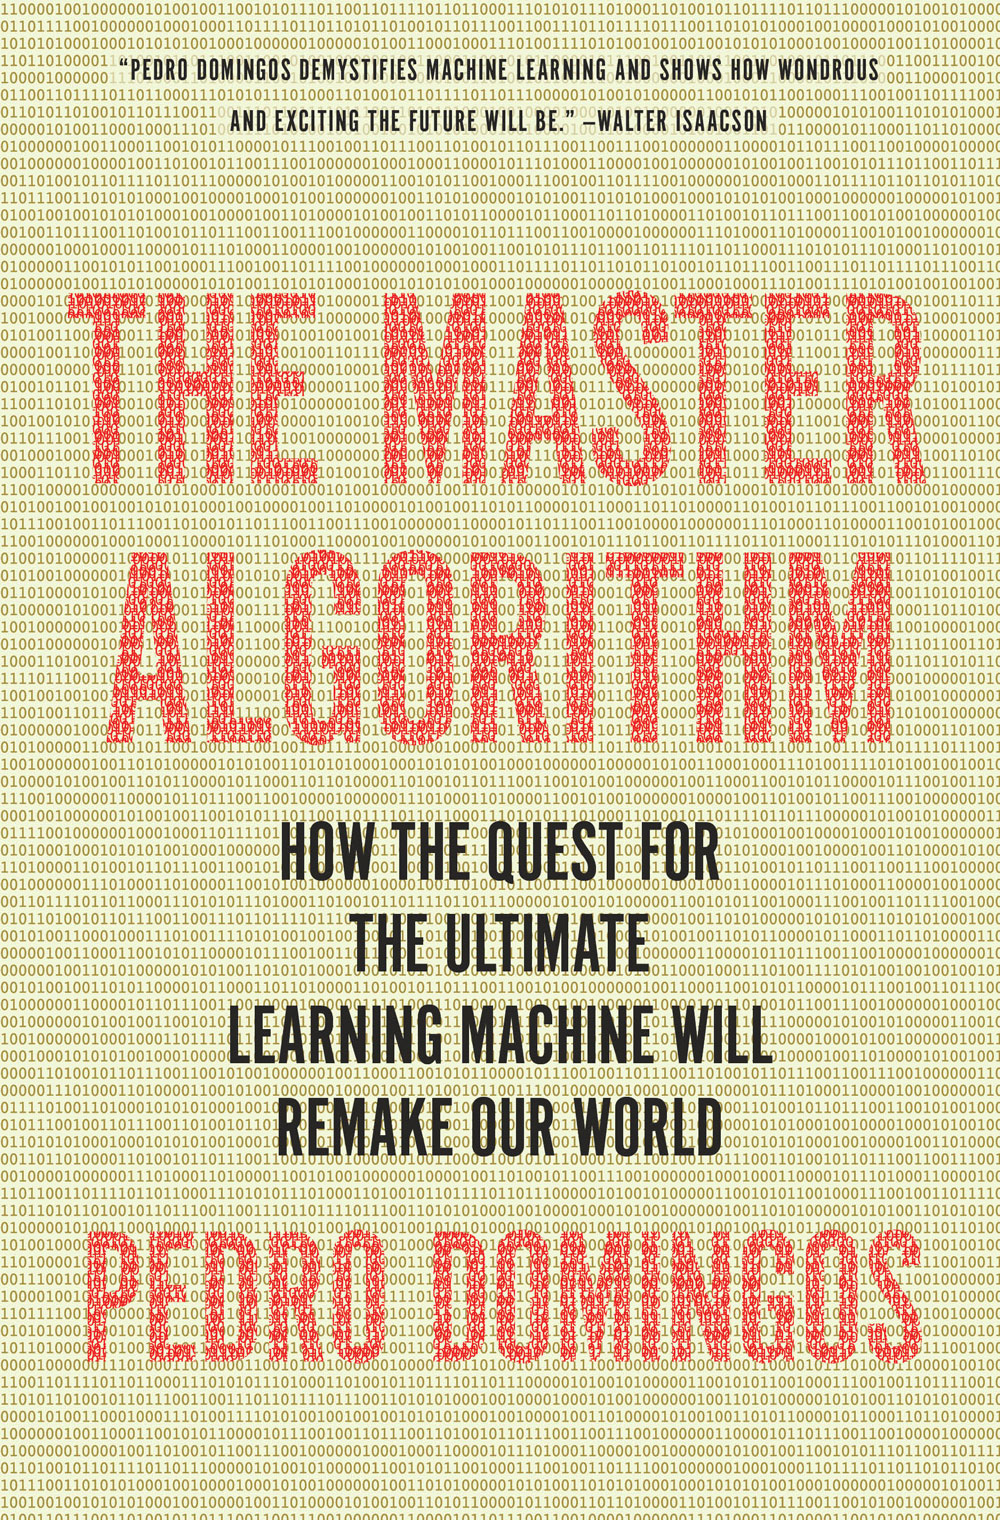 The_Master_Algorithm_Pedros_Domingos